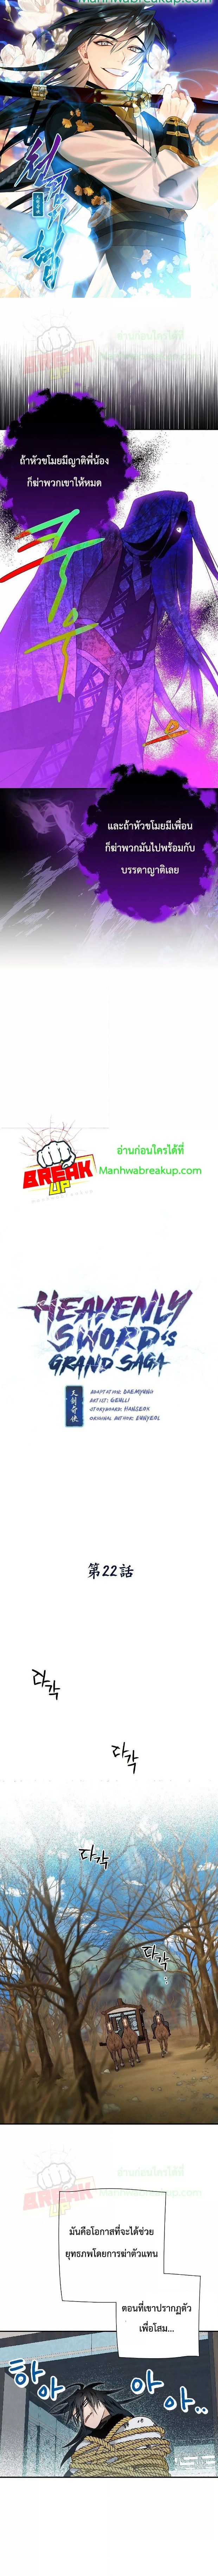 Heavenly Sword’s Grand Saga 22 (1)